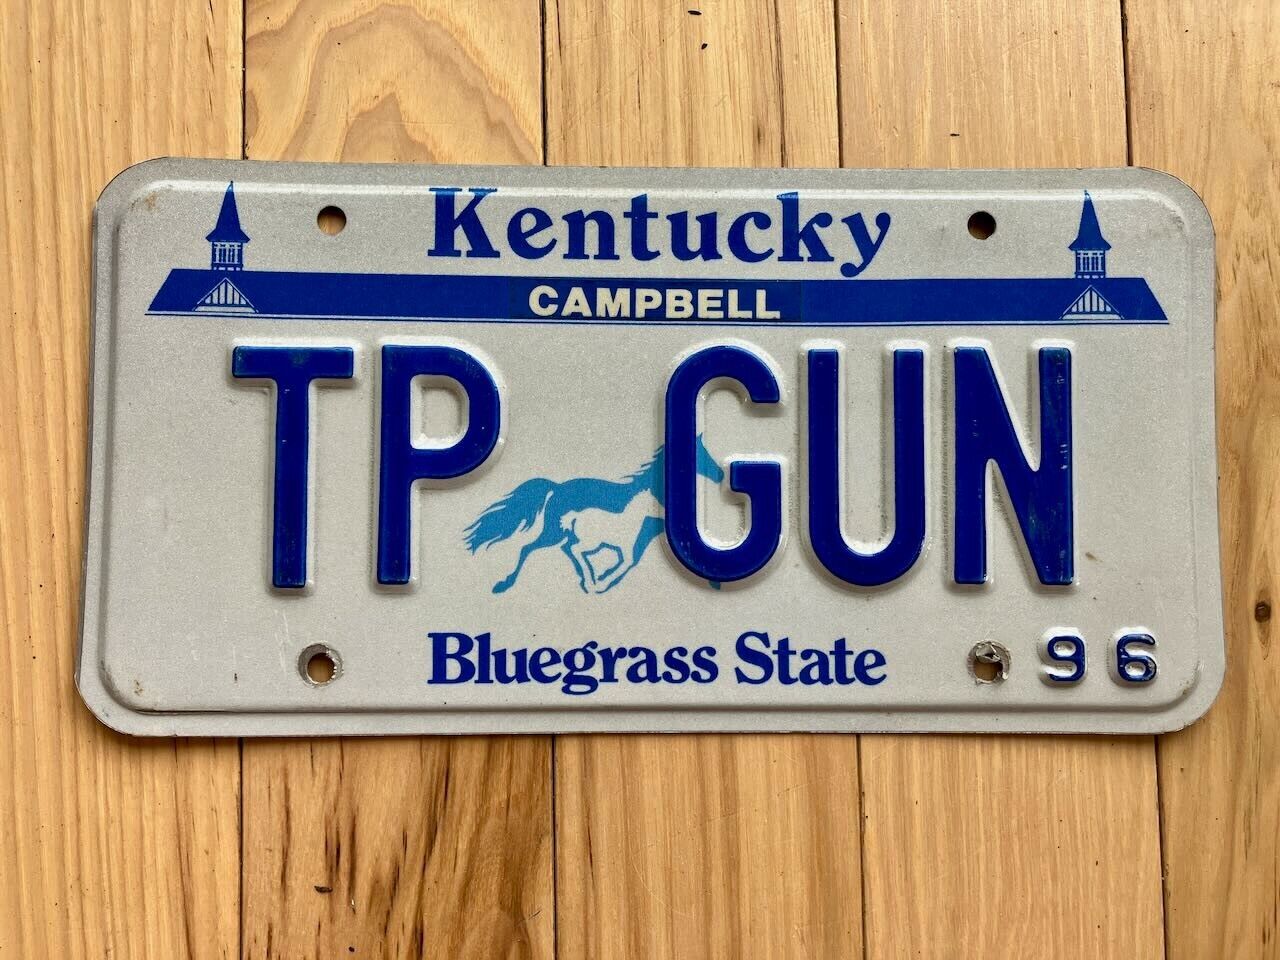 1996 Kentucky Vanity License Plate - Top Gun